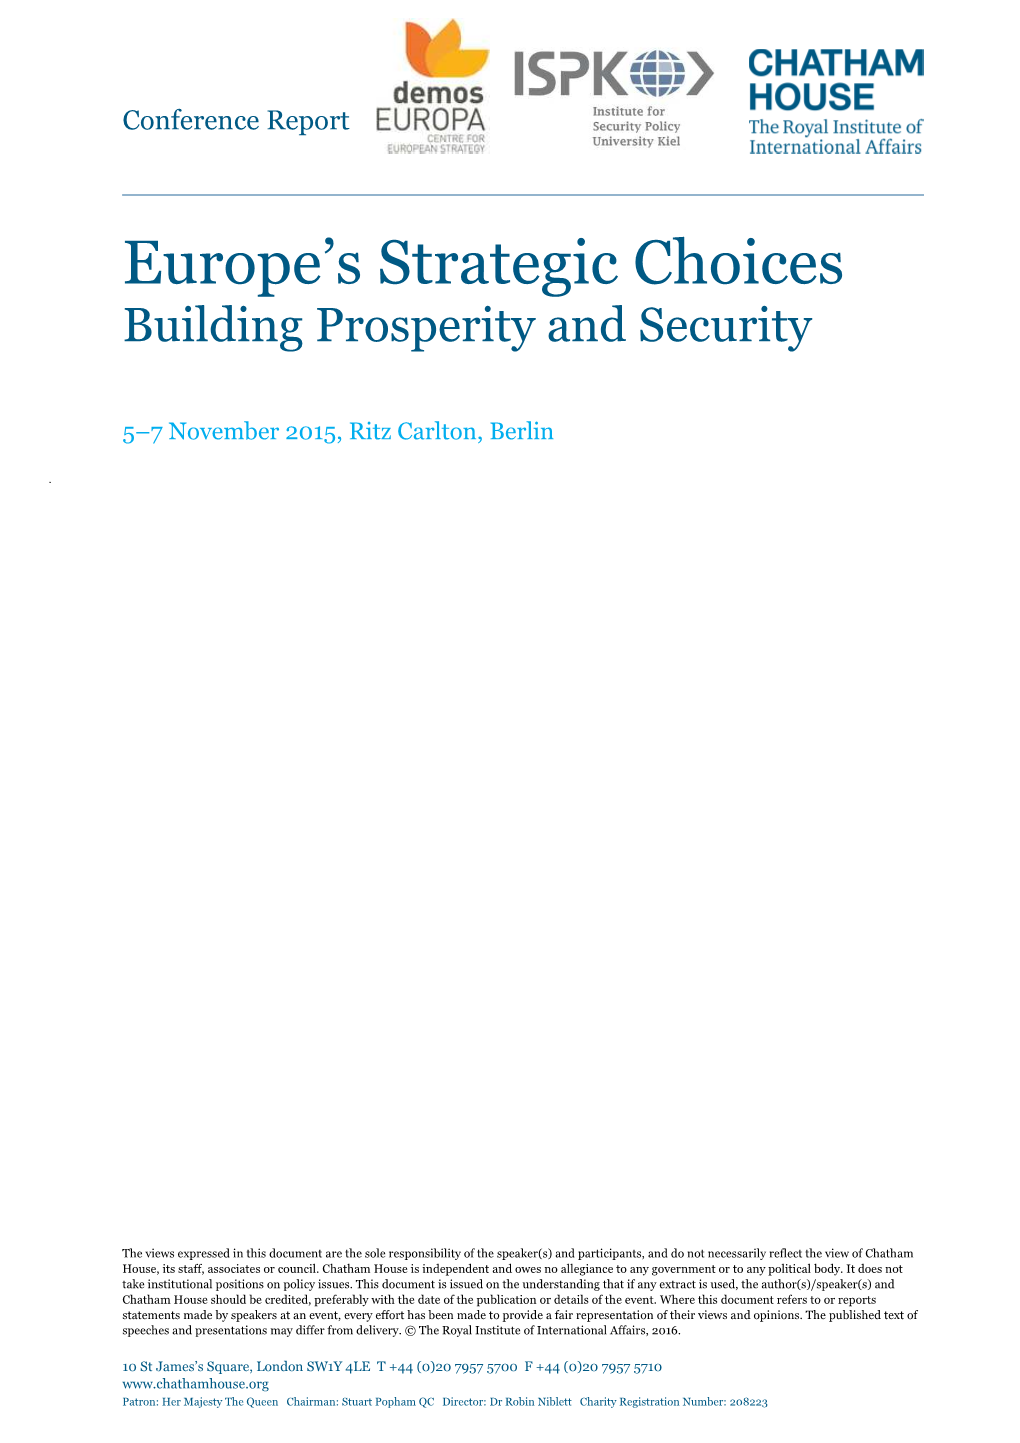 Europe's Strategic Choices 2015